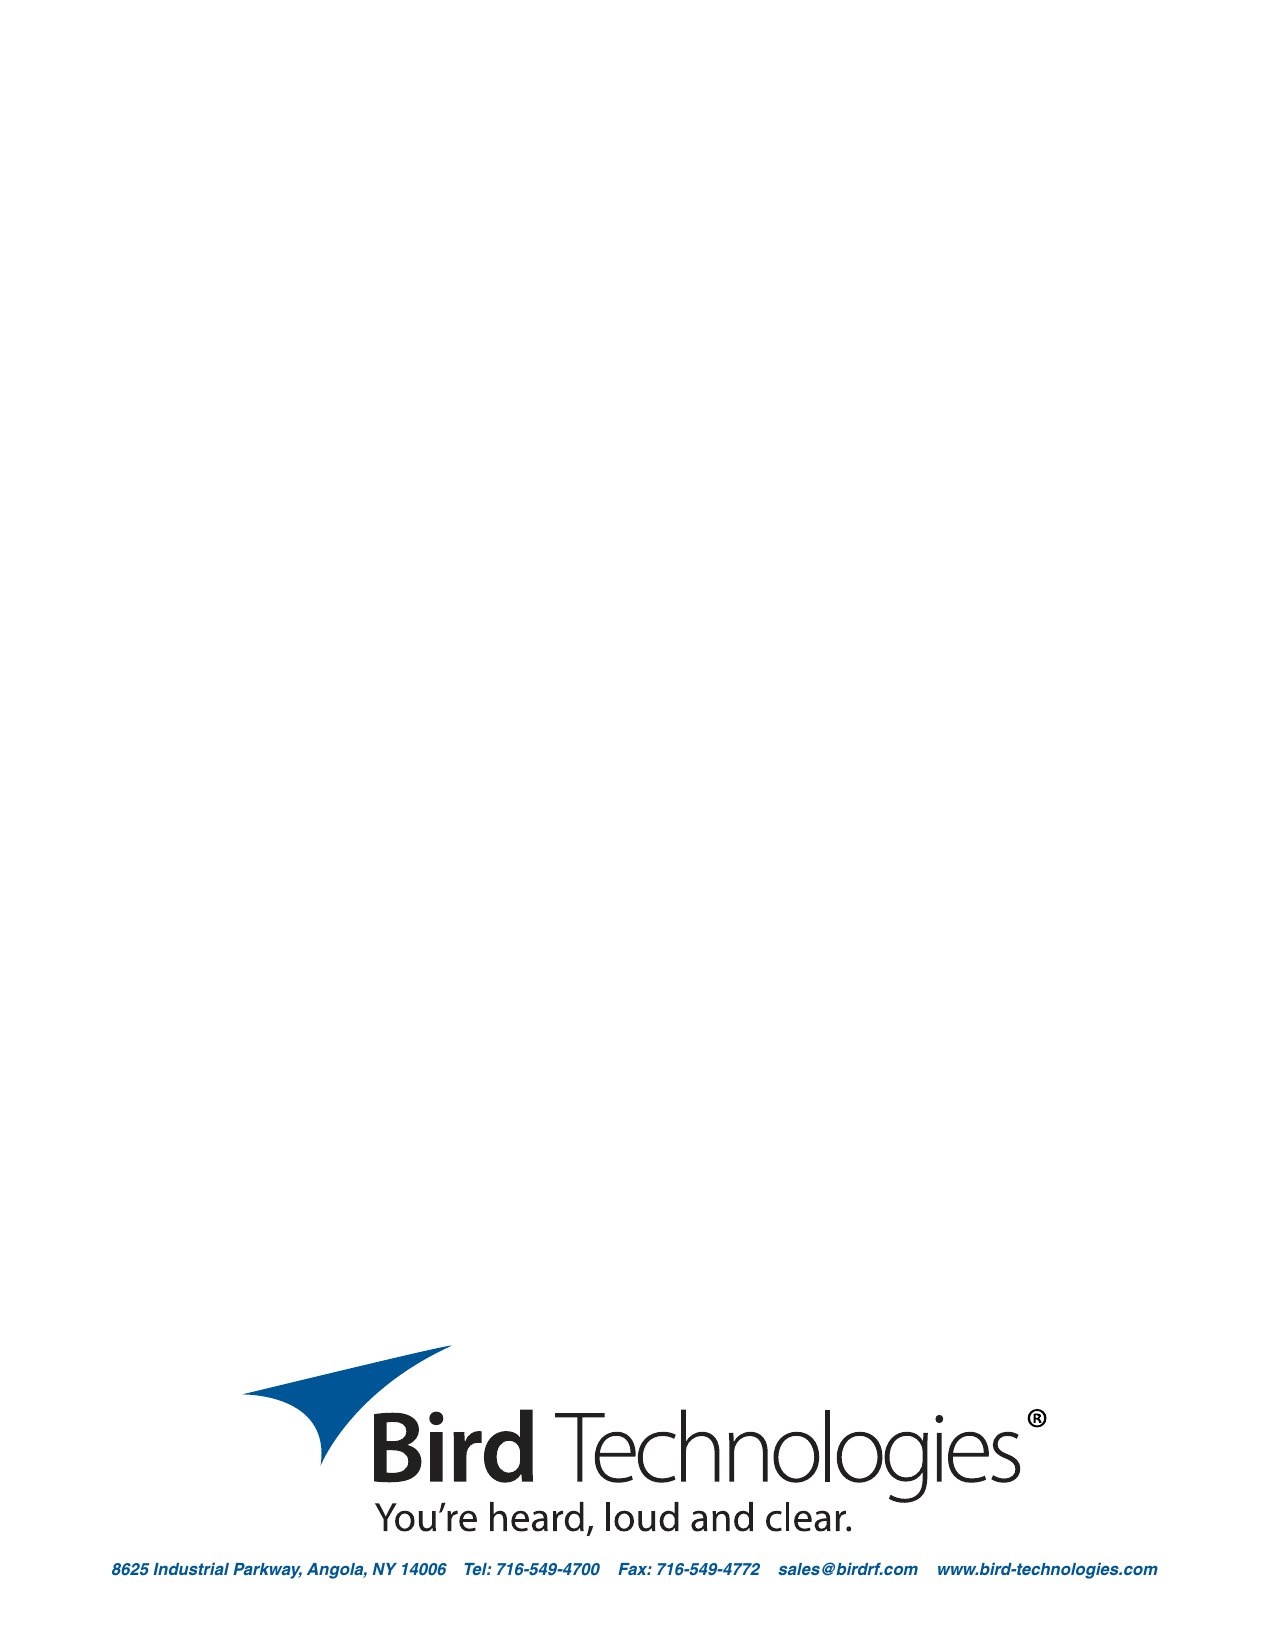 Bird Technologies                               Manual 7-9598-2.1(Rough Draft)                                 10/17/16                                  Page 248625 Industrial Parkway, Angola, NY 14006    Tel: 716-549-4700    Fax: 716-549-4772    sales@birdrf.com    www.bird-technologies.com 